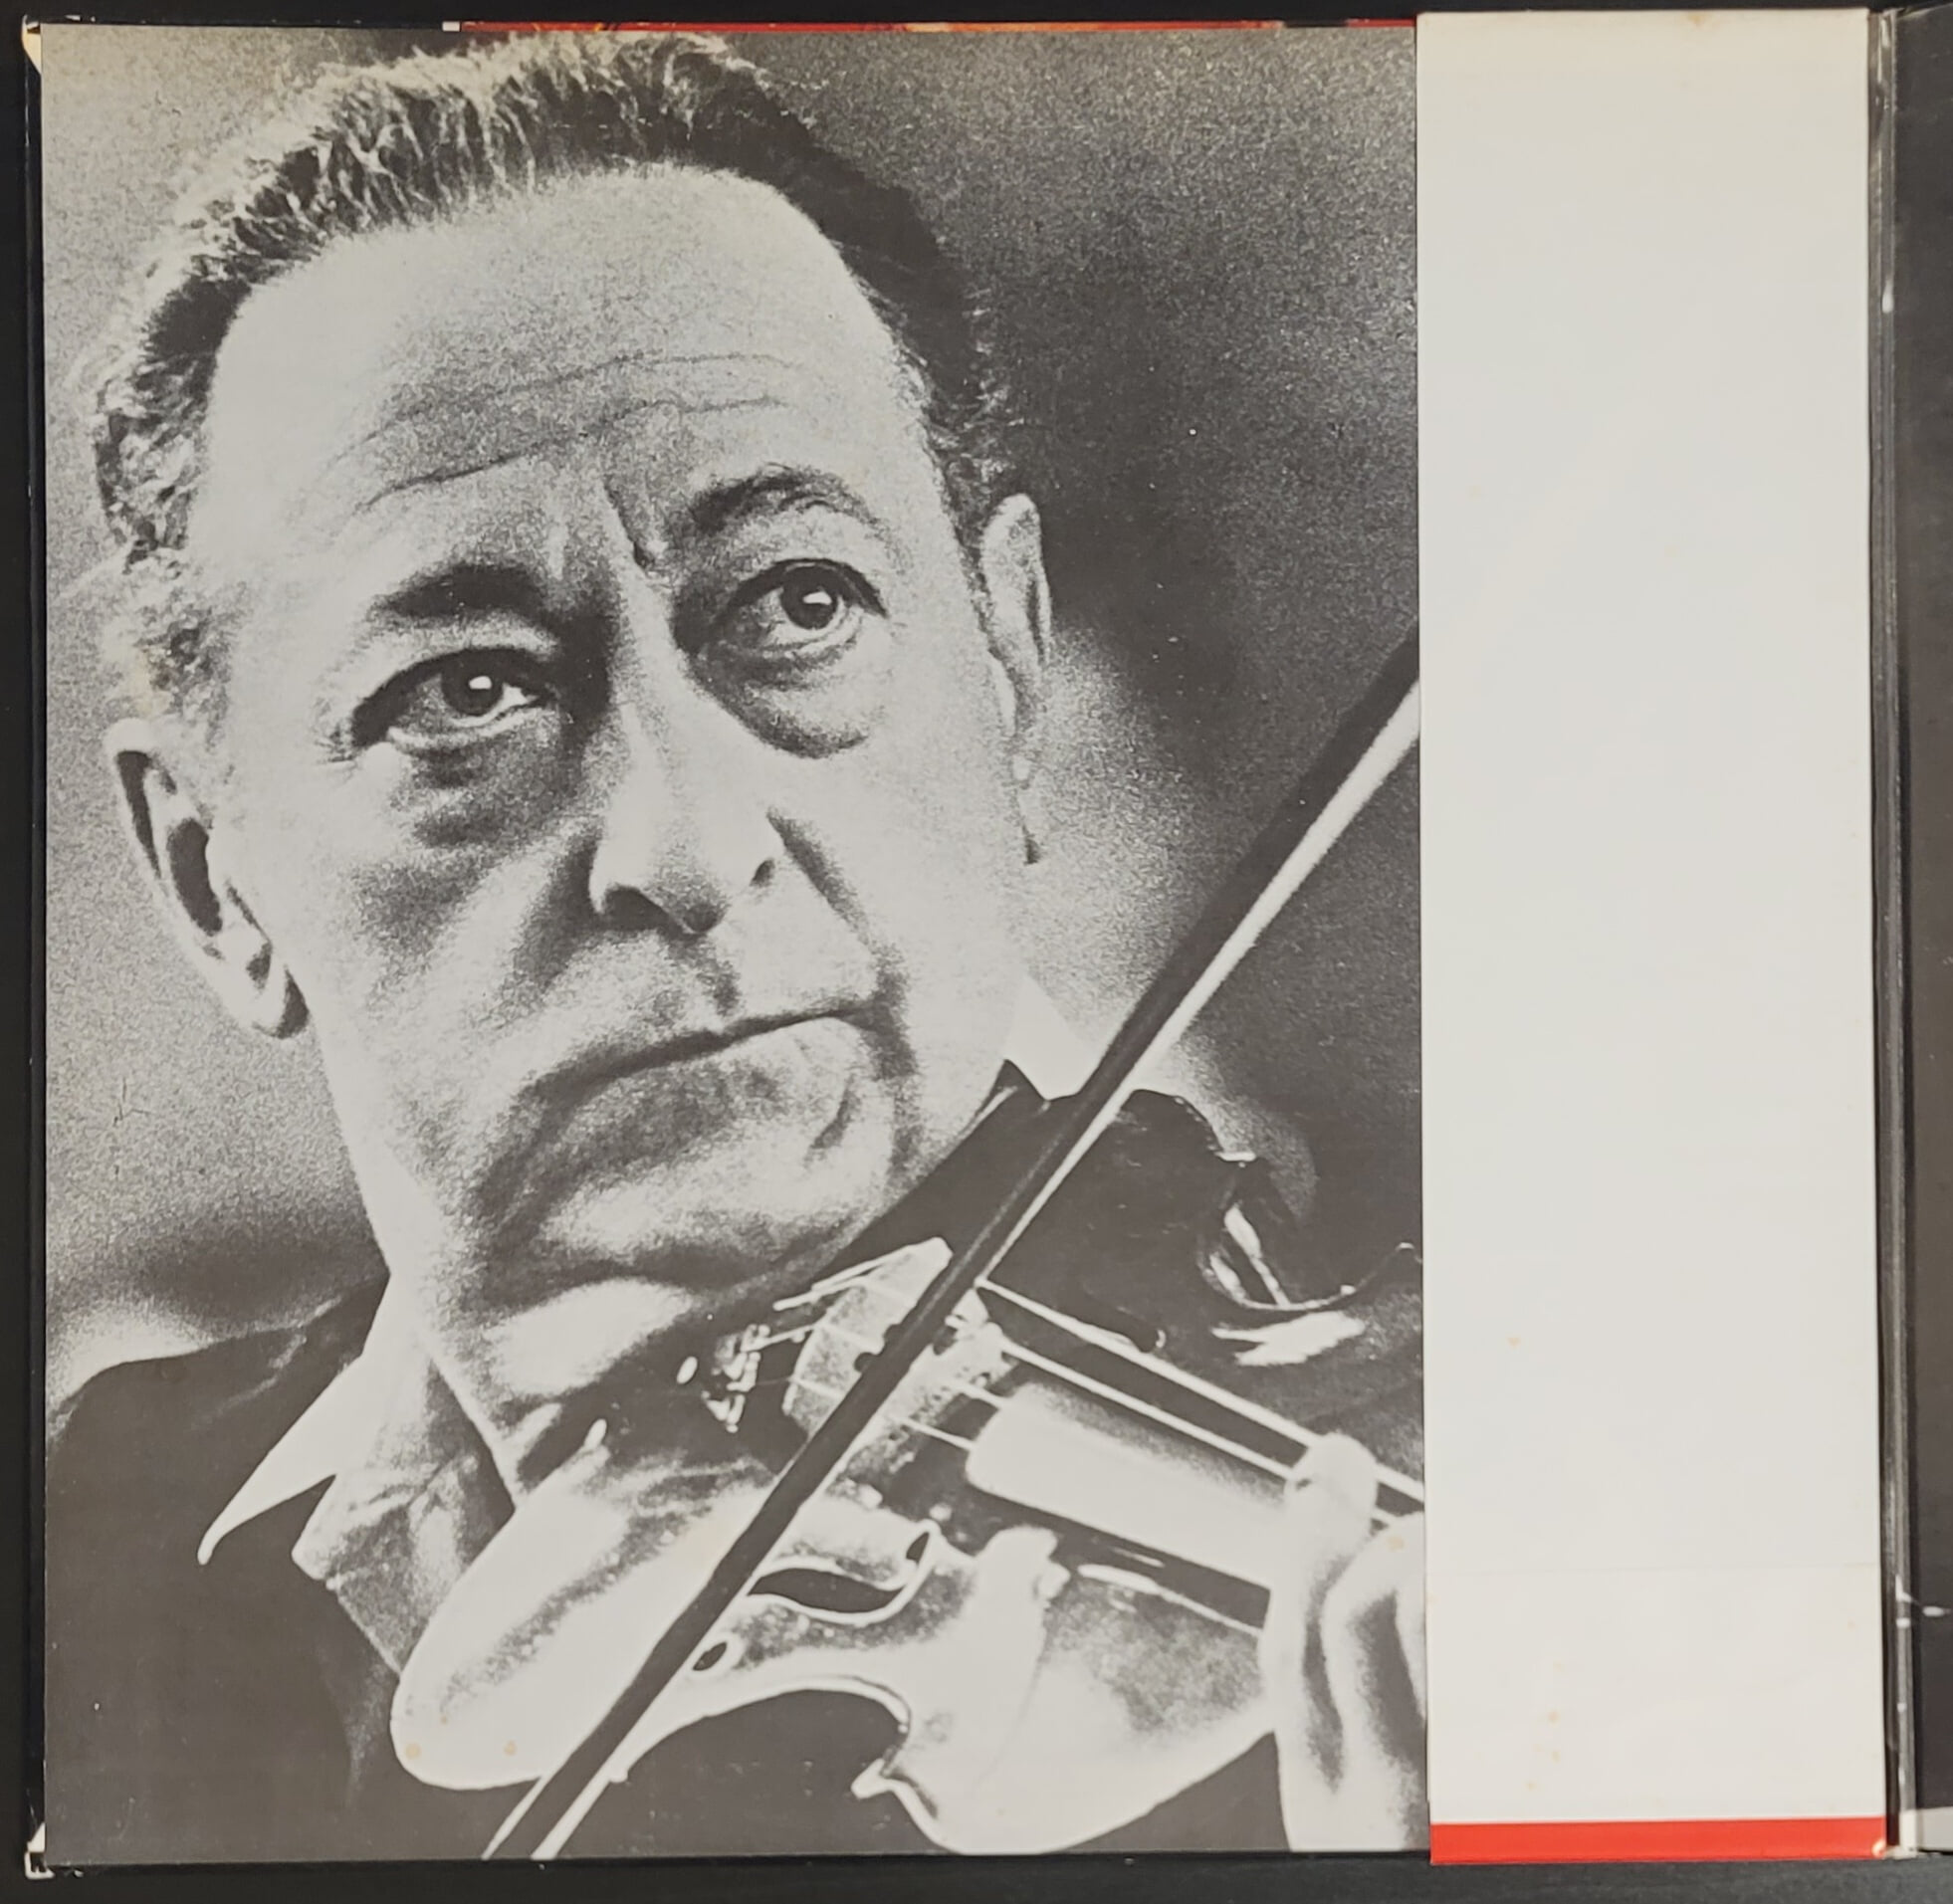 [LP] 67년 Heifetz Zigeunerweisen Mendelssohn Tchaikovsky 하이페츠 찌고이네르바이젠 멘델스존 차이콥스키 [일본반] 게이트폴드 1967년